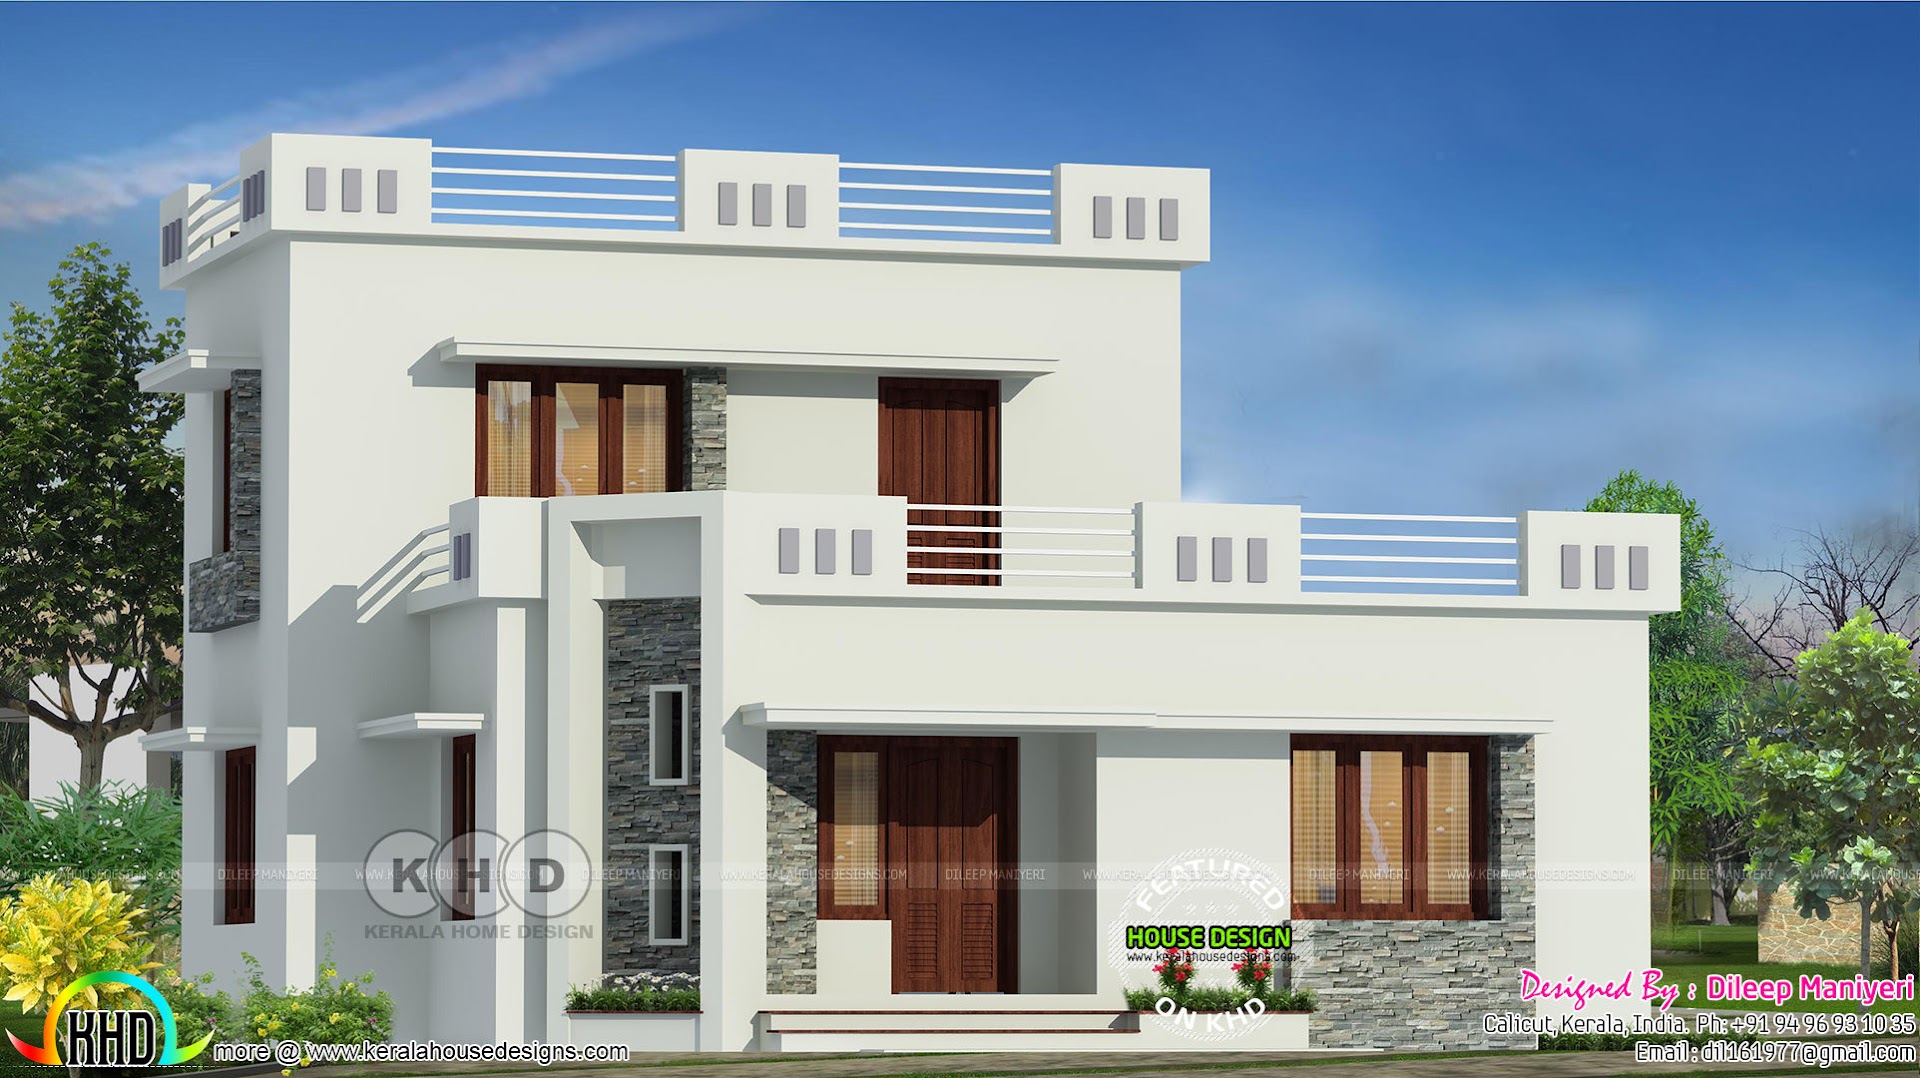 1444 sq ft flat  roof  3  bedroom  home  Kerala home  design 